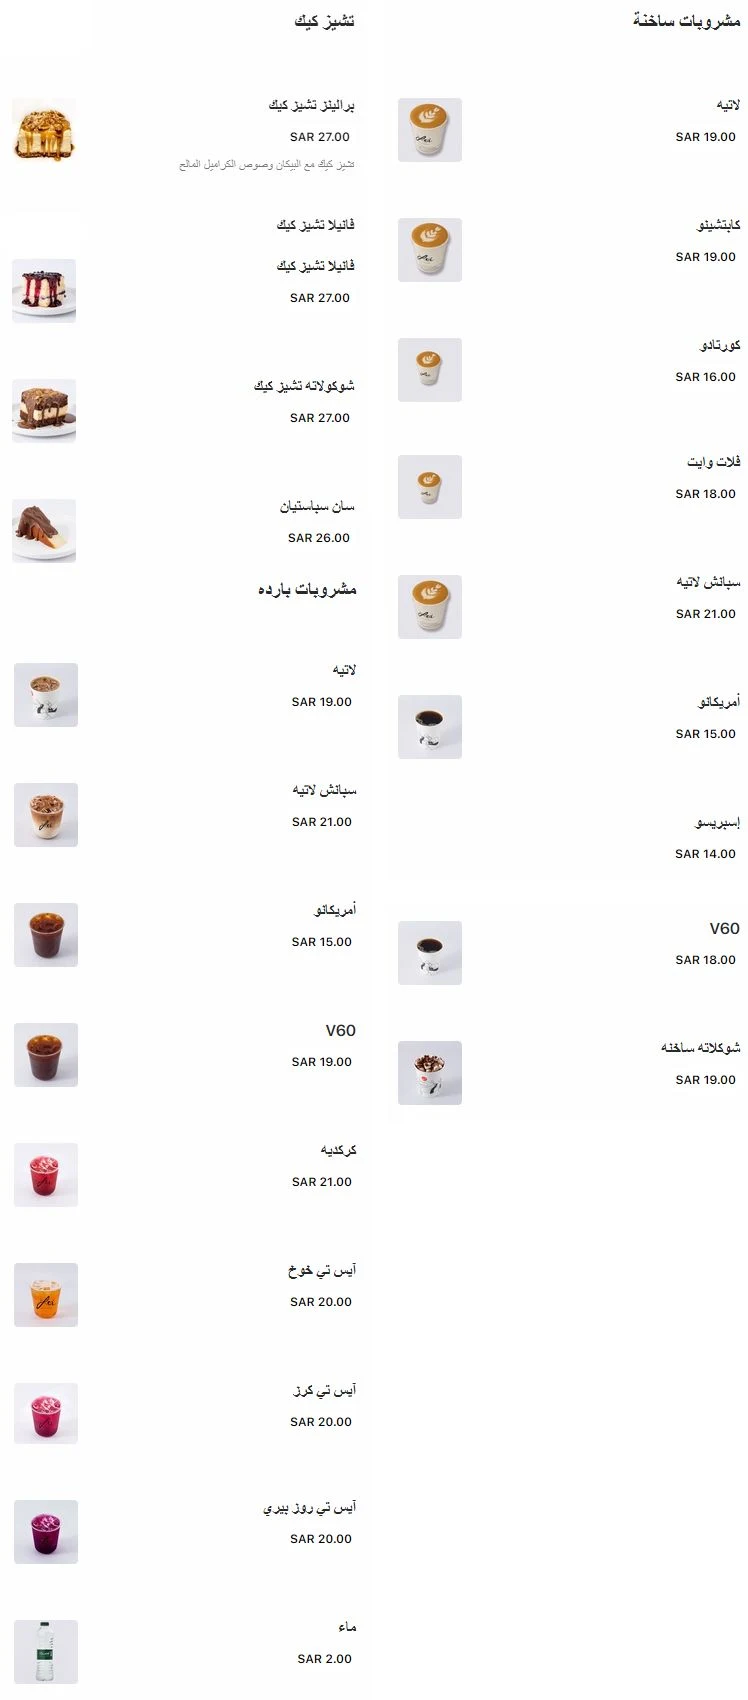 Yoi cheesecake كافيه في الرياض ( منيو + اسعار + موقع )